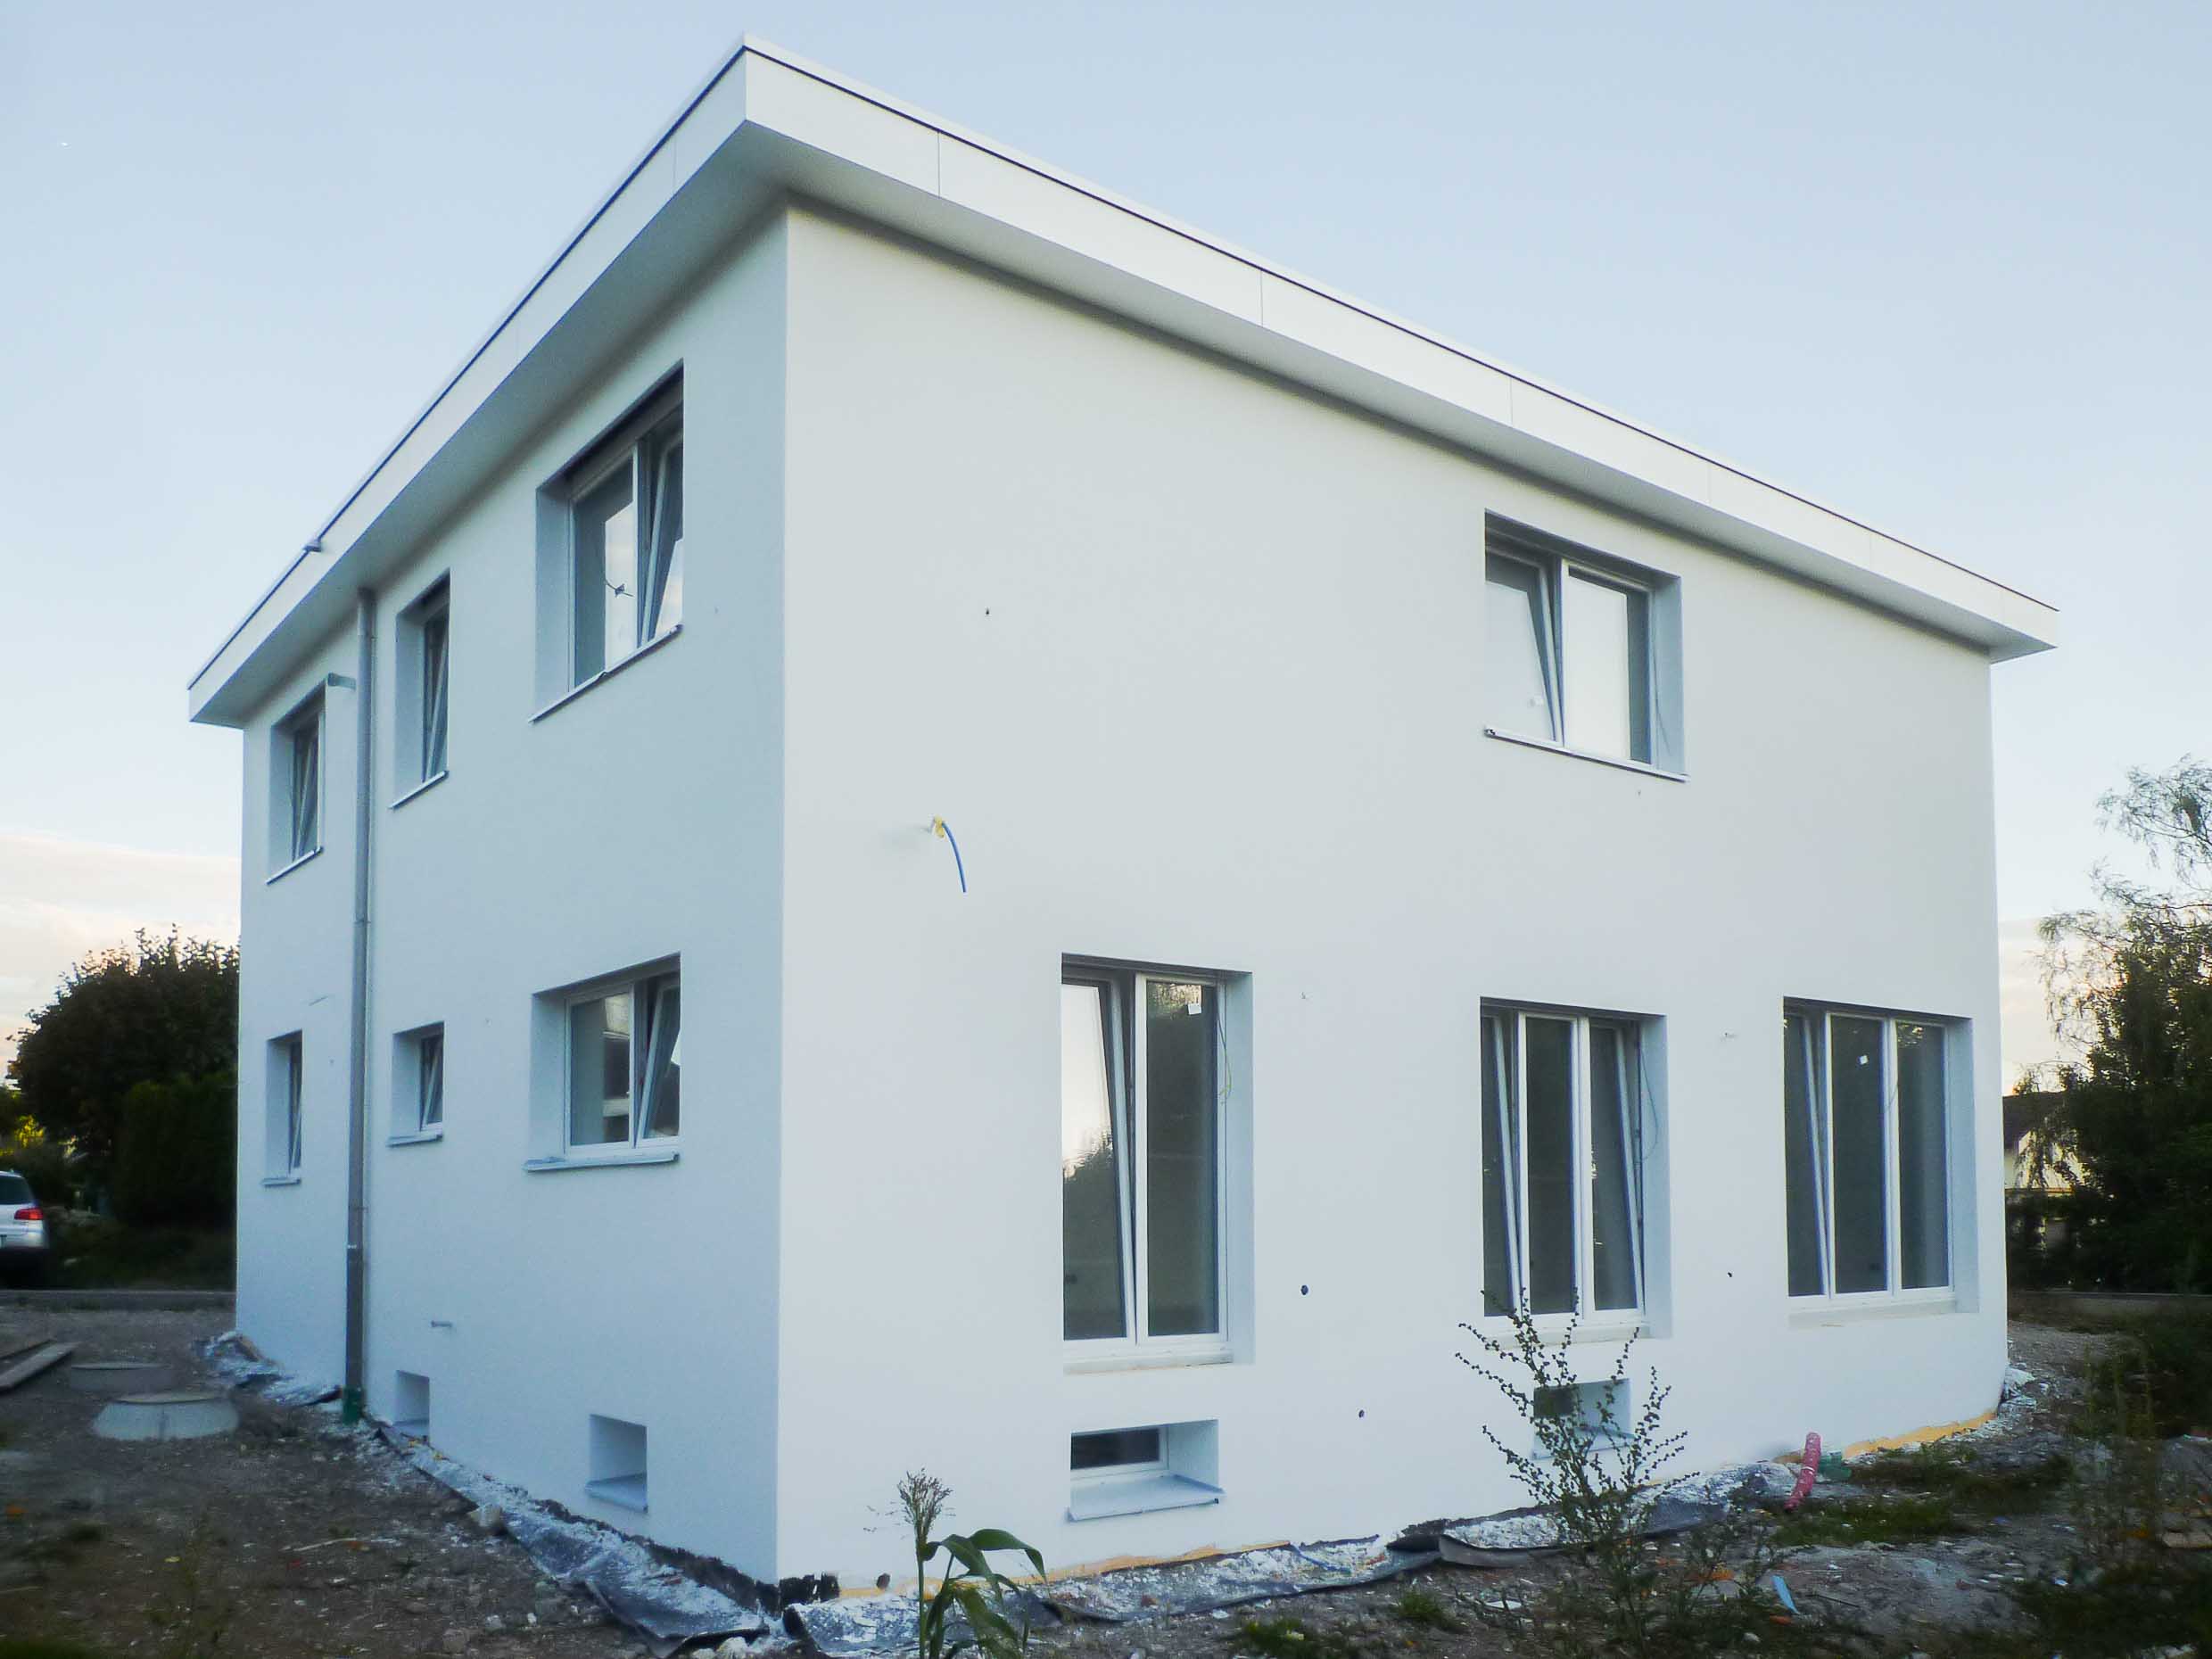 4-architektur-umbau-nachher-1-2016